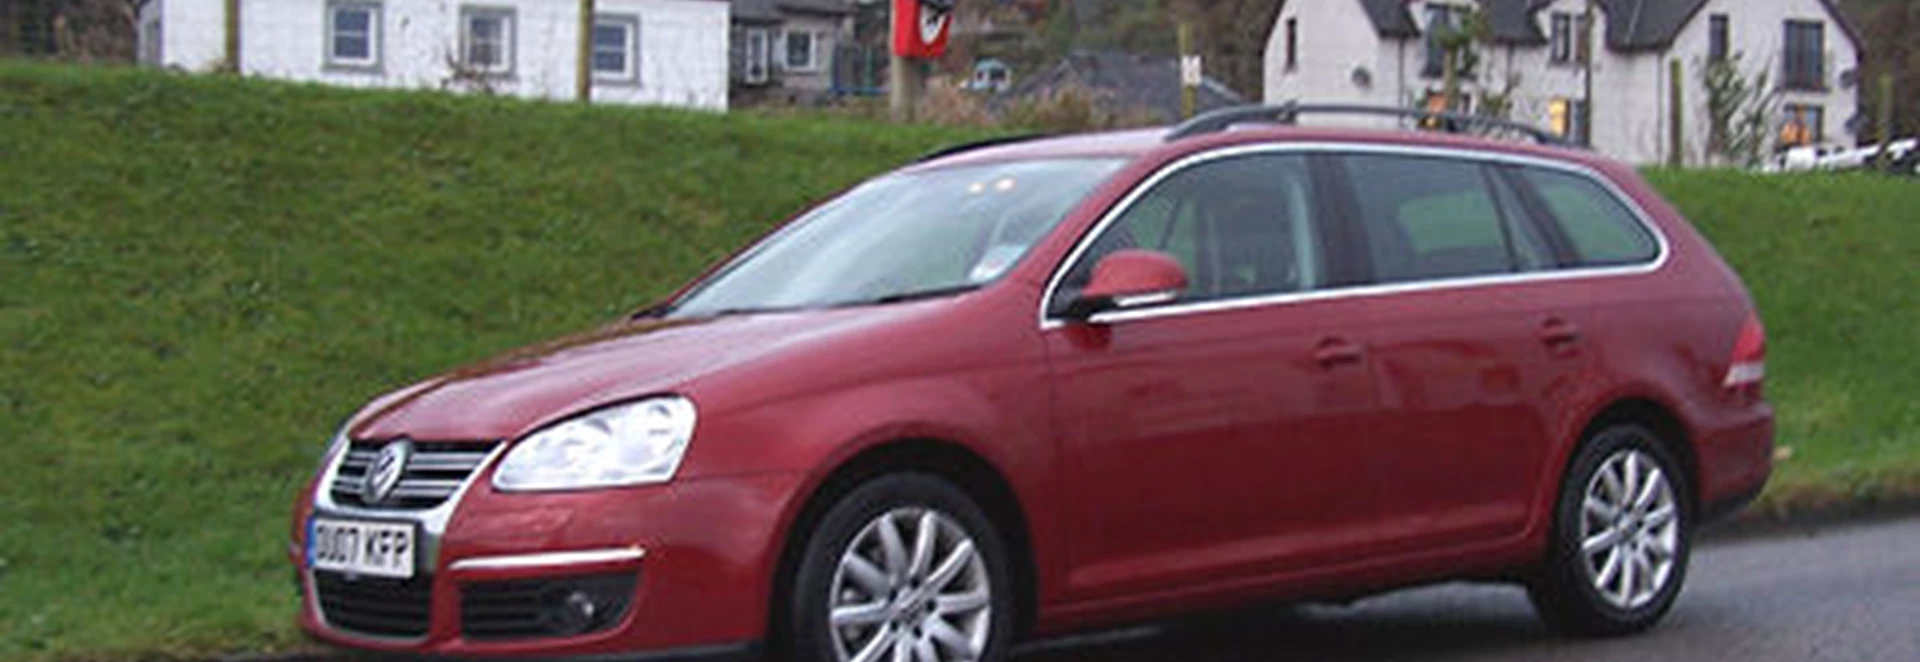 Volkswagen Golf 1.9 TDI SE Estate (2007) 